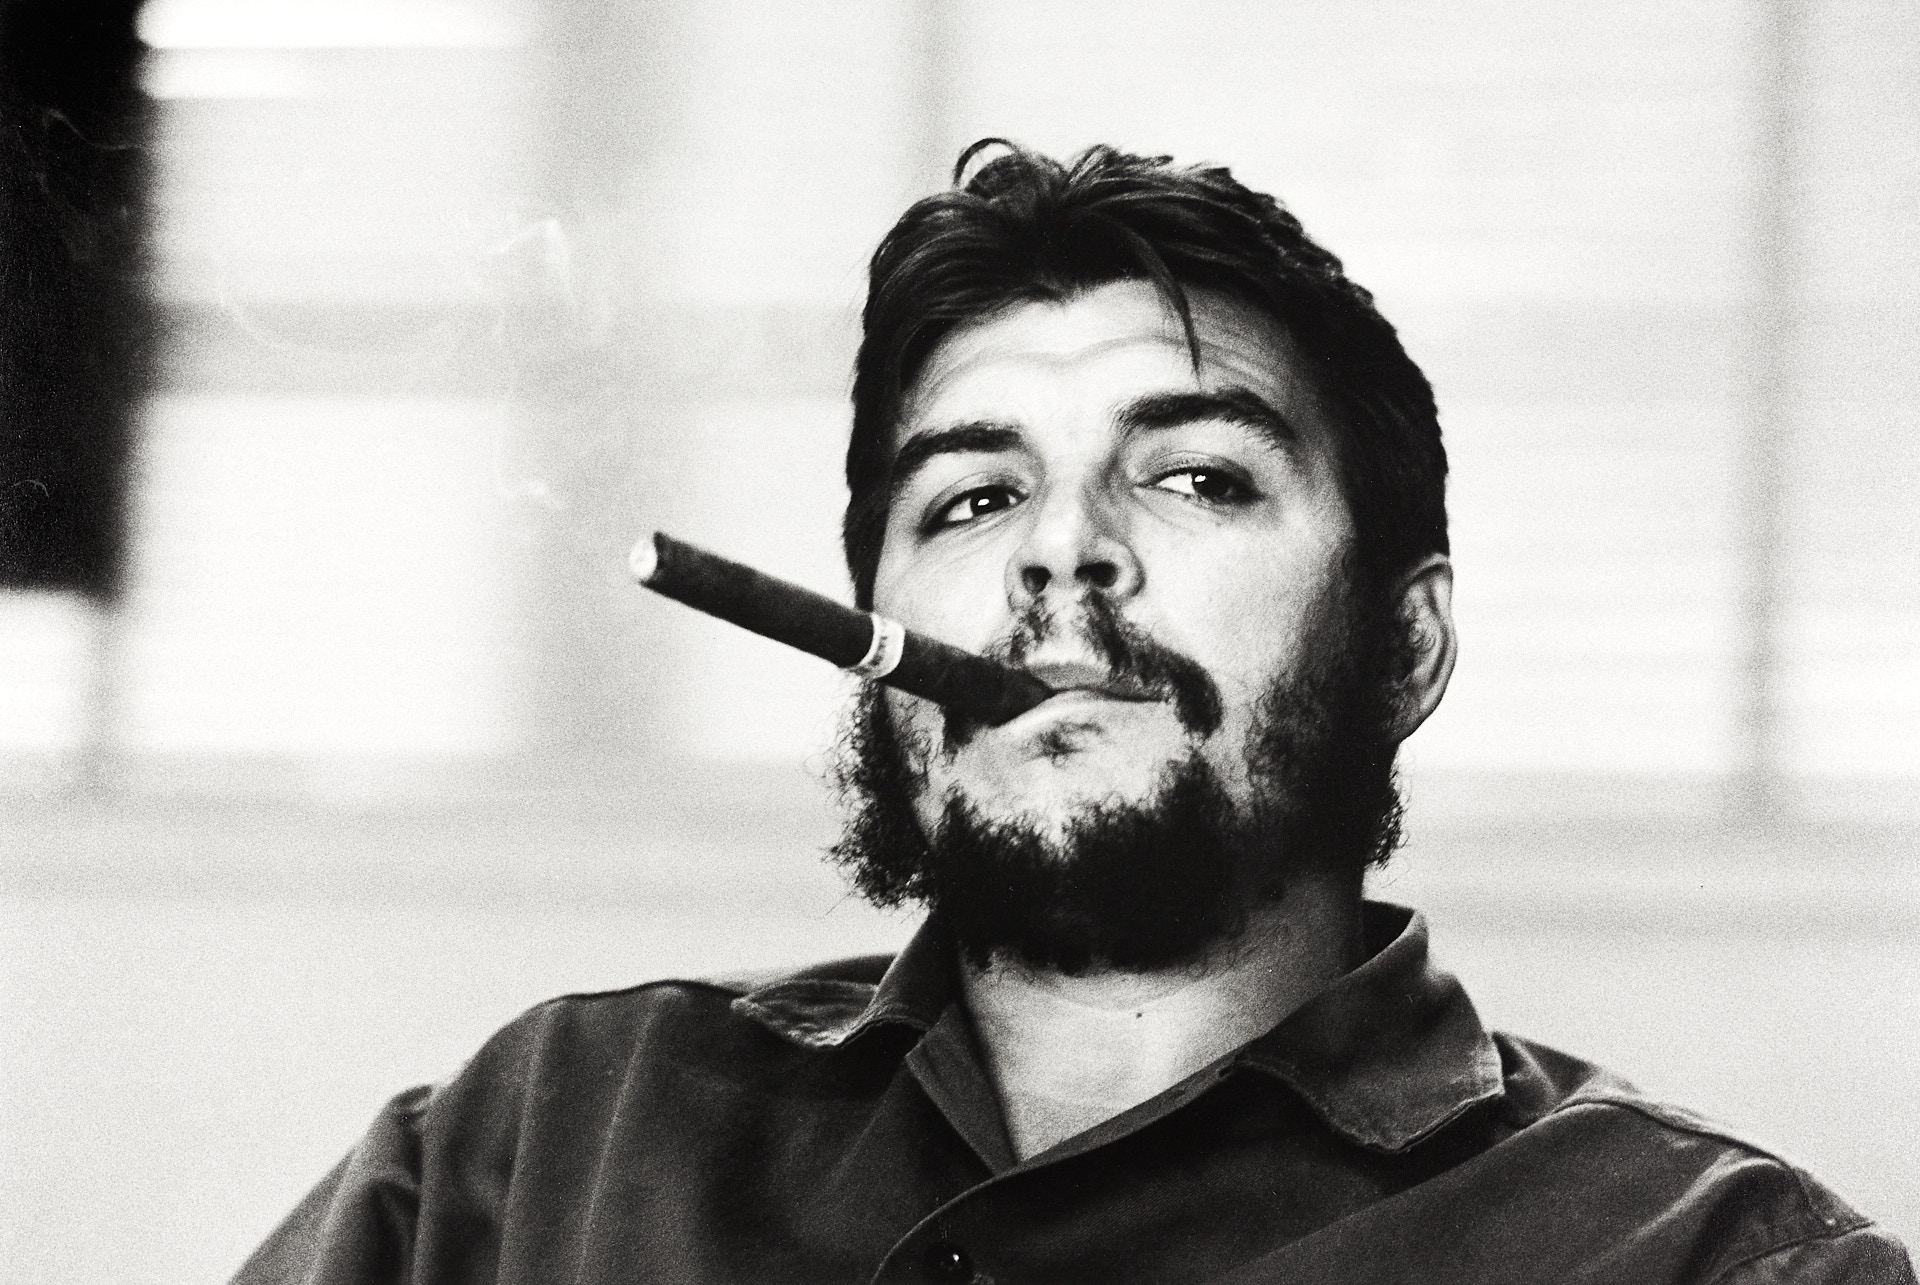 RENÉ BURRI (1933-2014) - Che Guevara, Cuba 1963